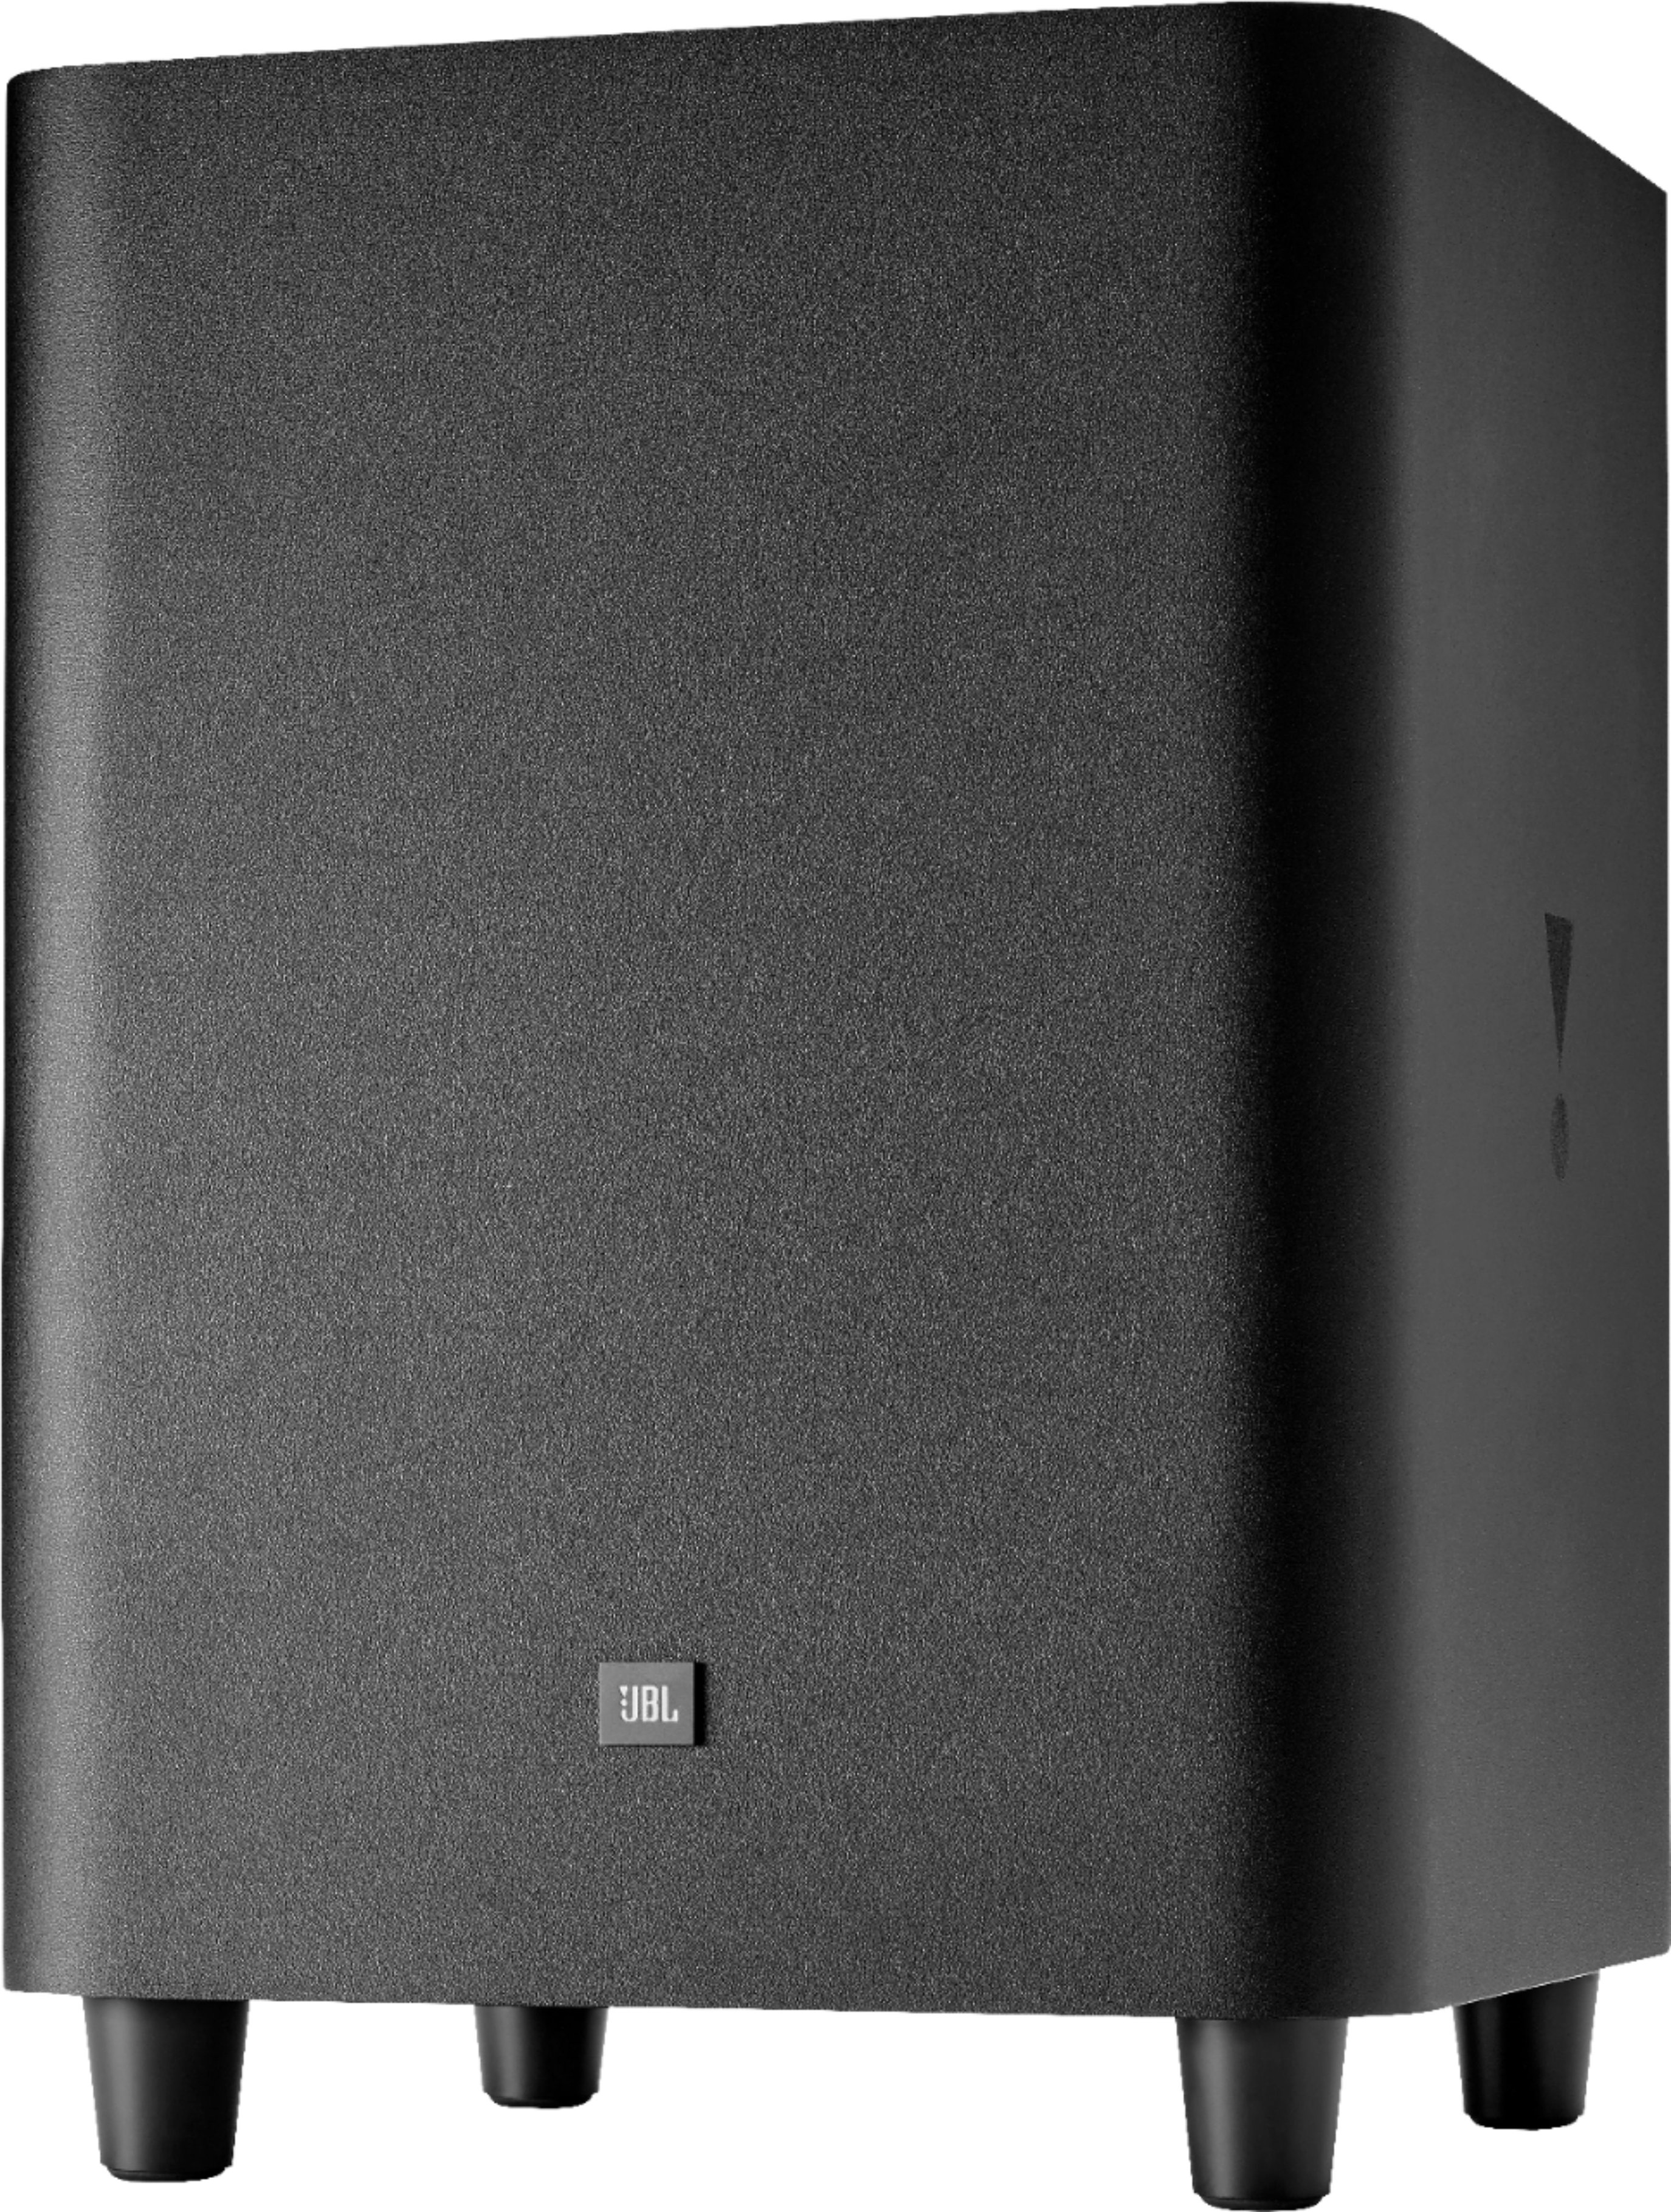 Buy: JBL 3.1-Channel Soundbar System with 10" Wireless Subwoofer Digital Amplifier Black JBLBAR31BLKAM